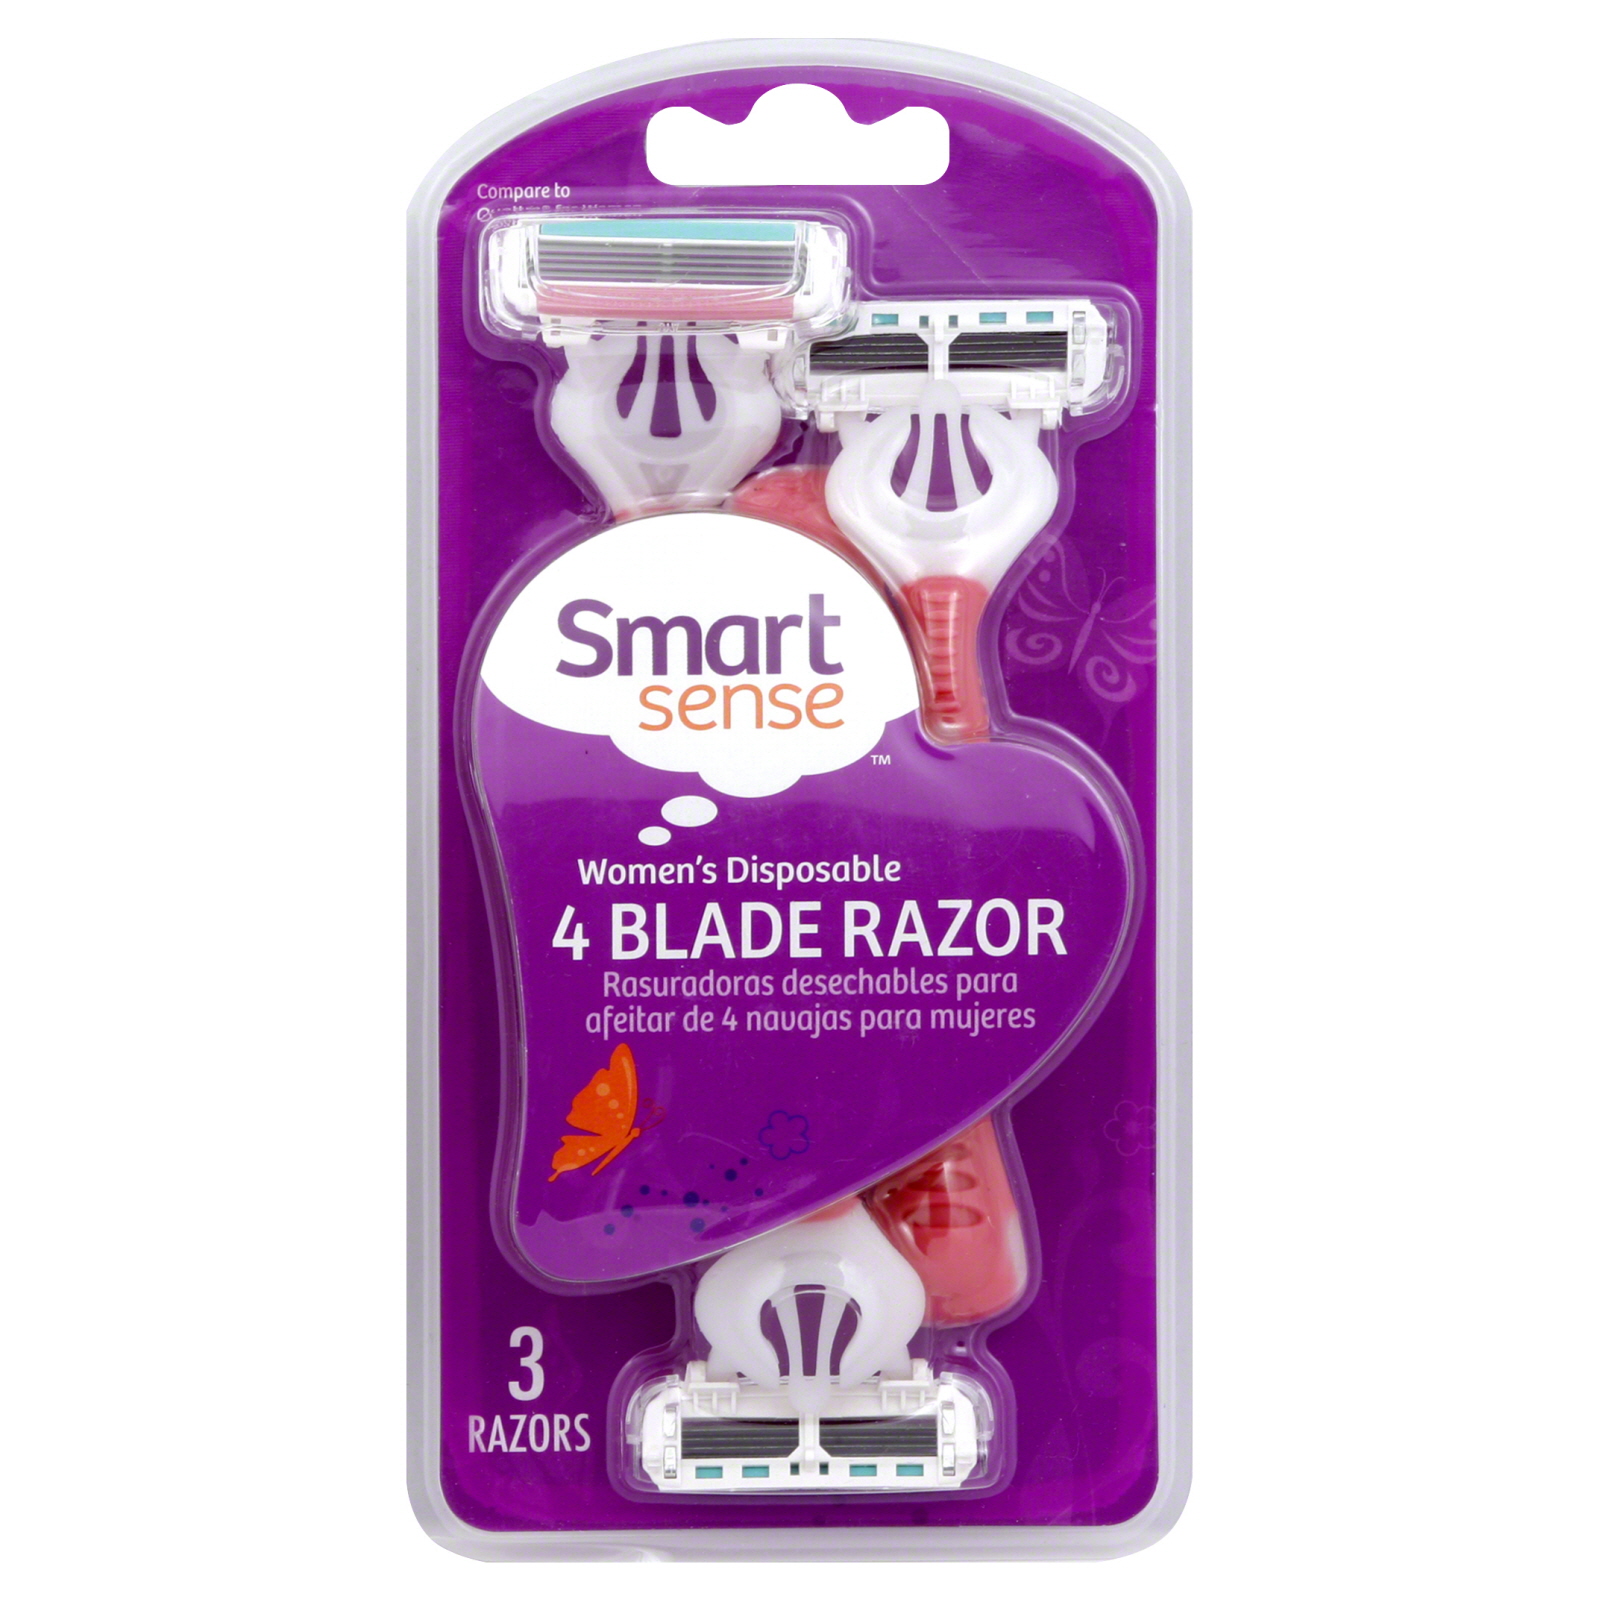 Smart Sense Razor, 4 Blade, Women's Disposable, 3 razors